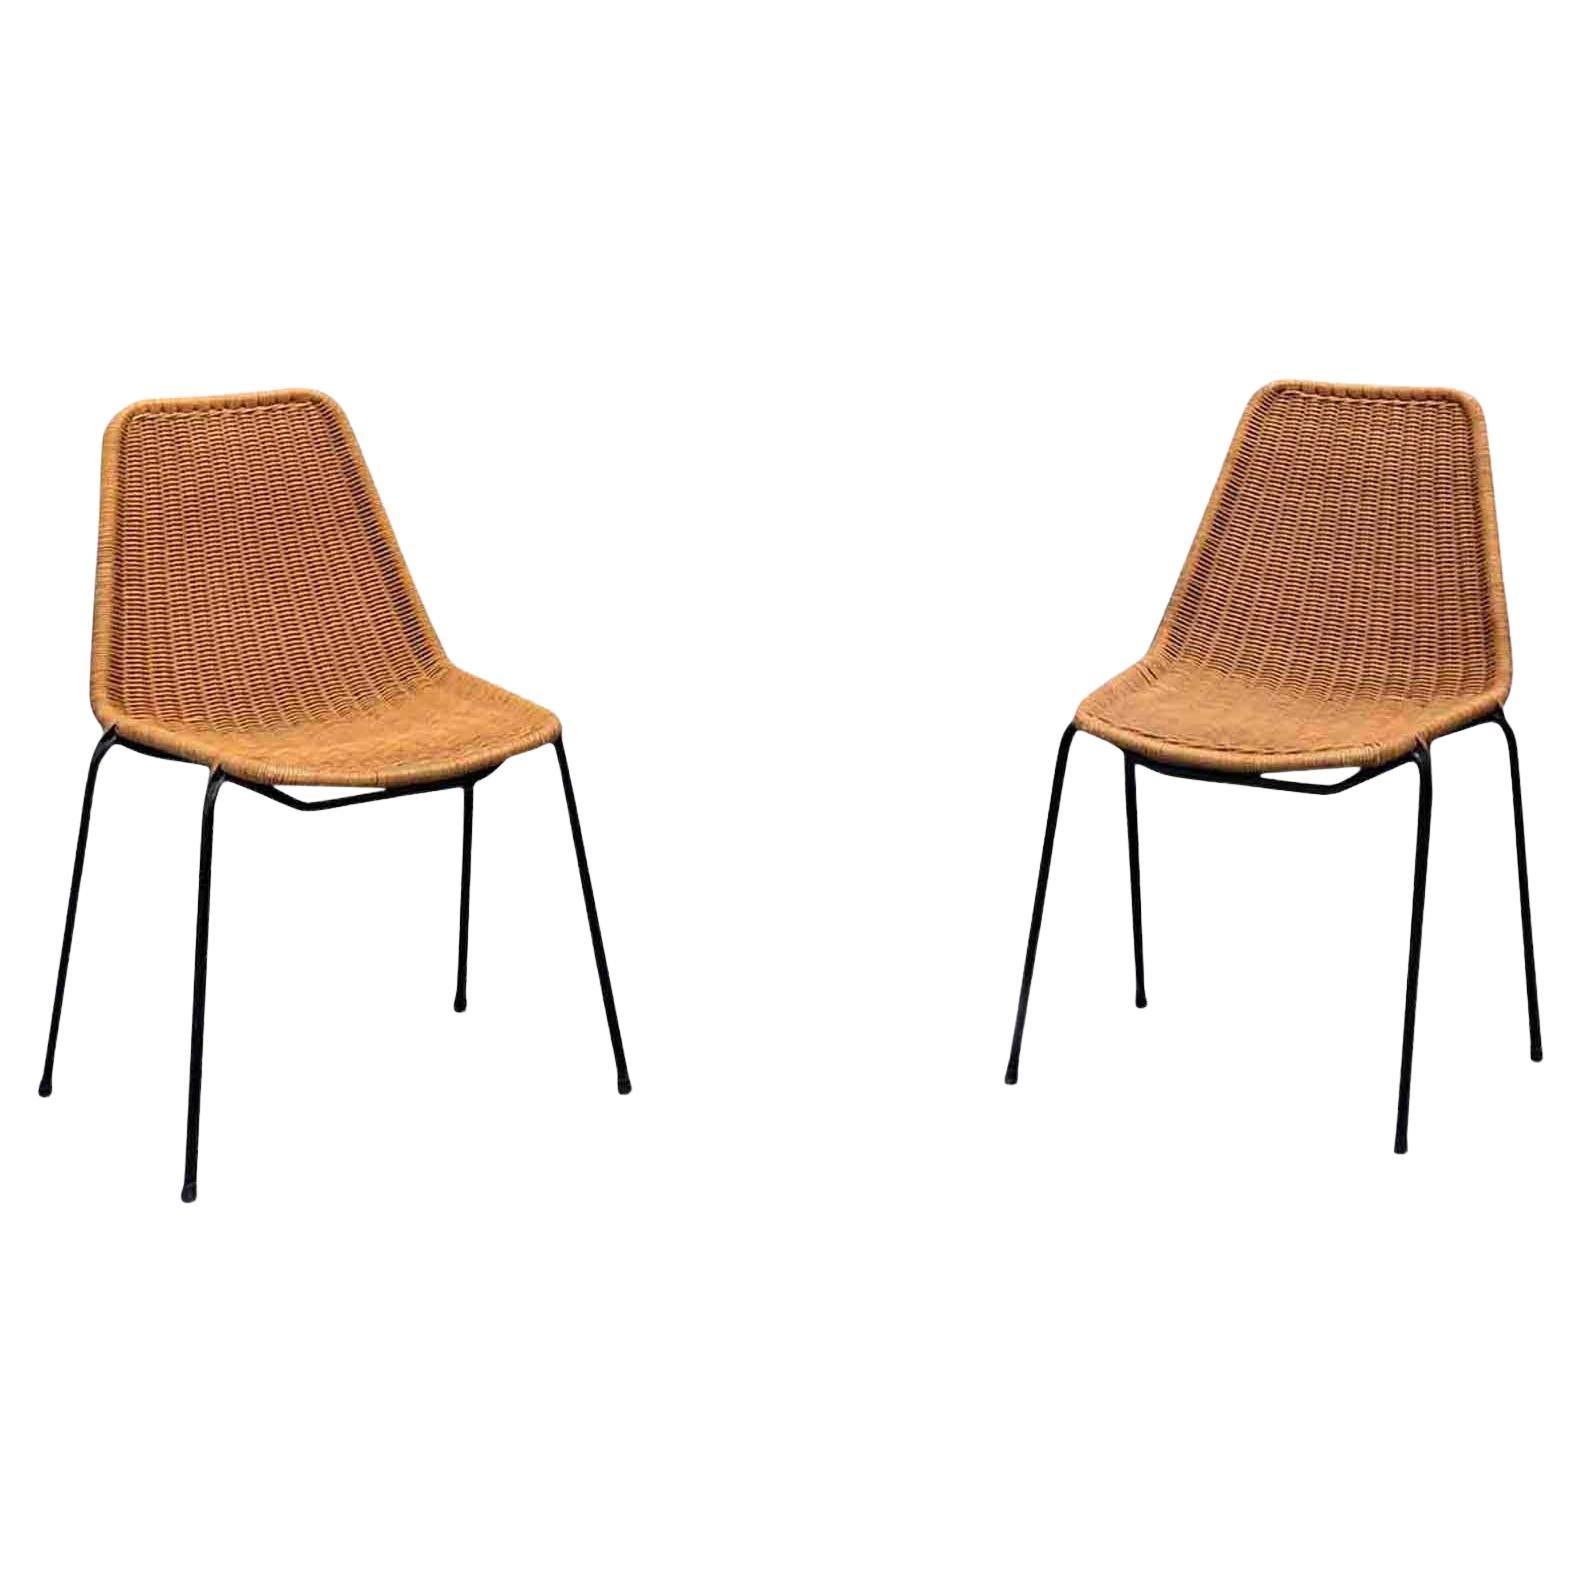 Basket Chairs by Gian Franco Legler, set of 2